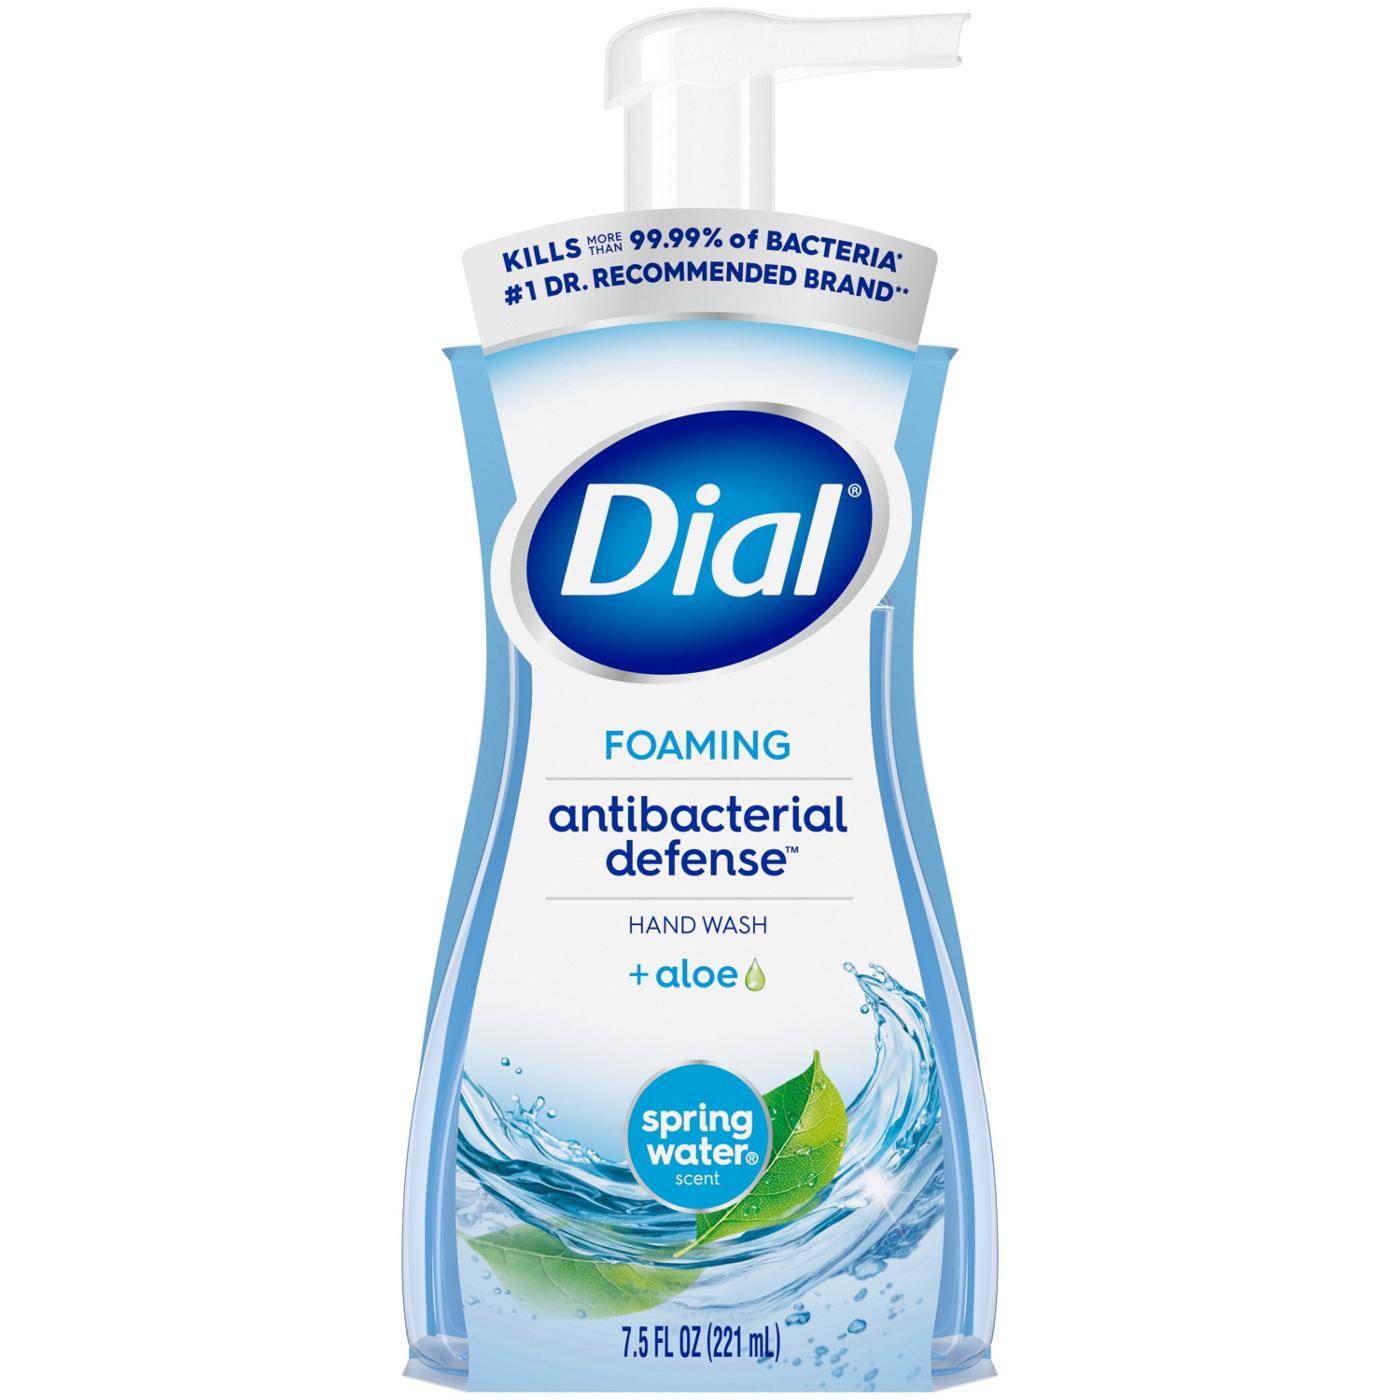 Dial Antibacterial Foaming Hand Soap - Spring Water; image 1 of 3